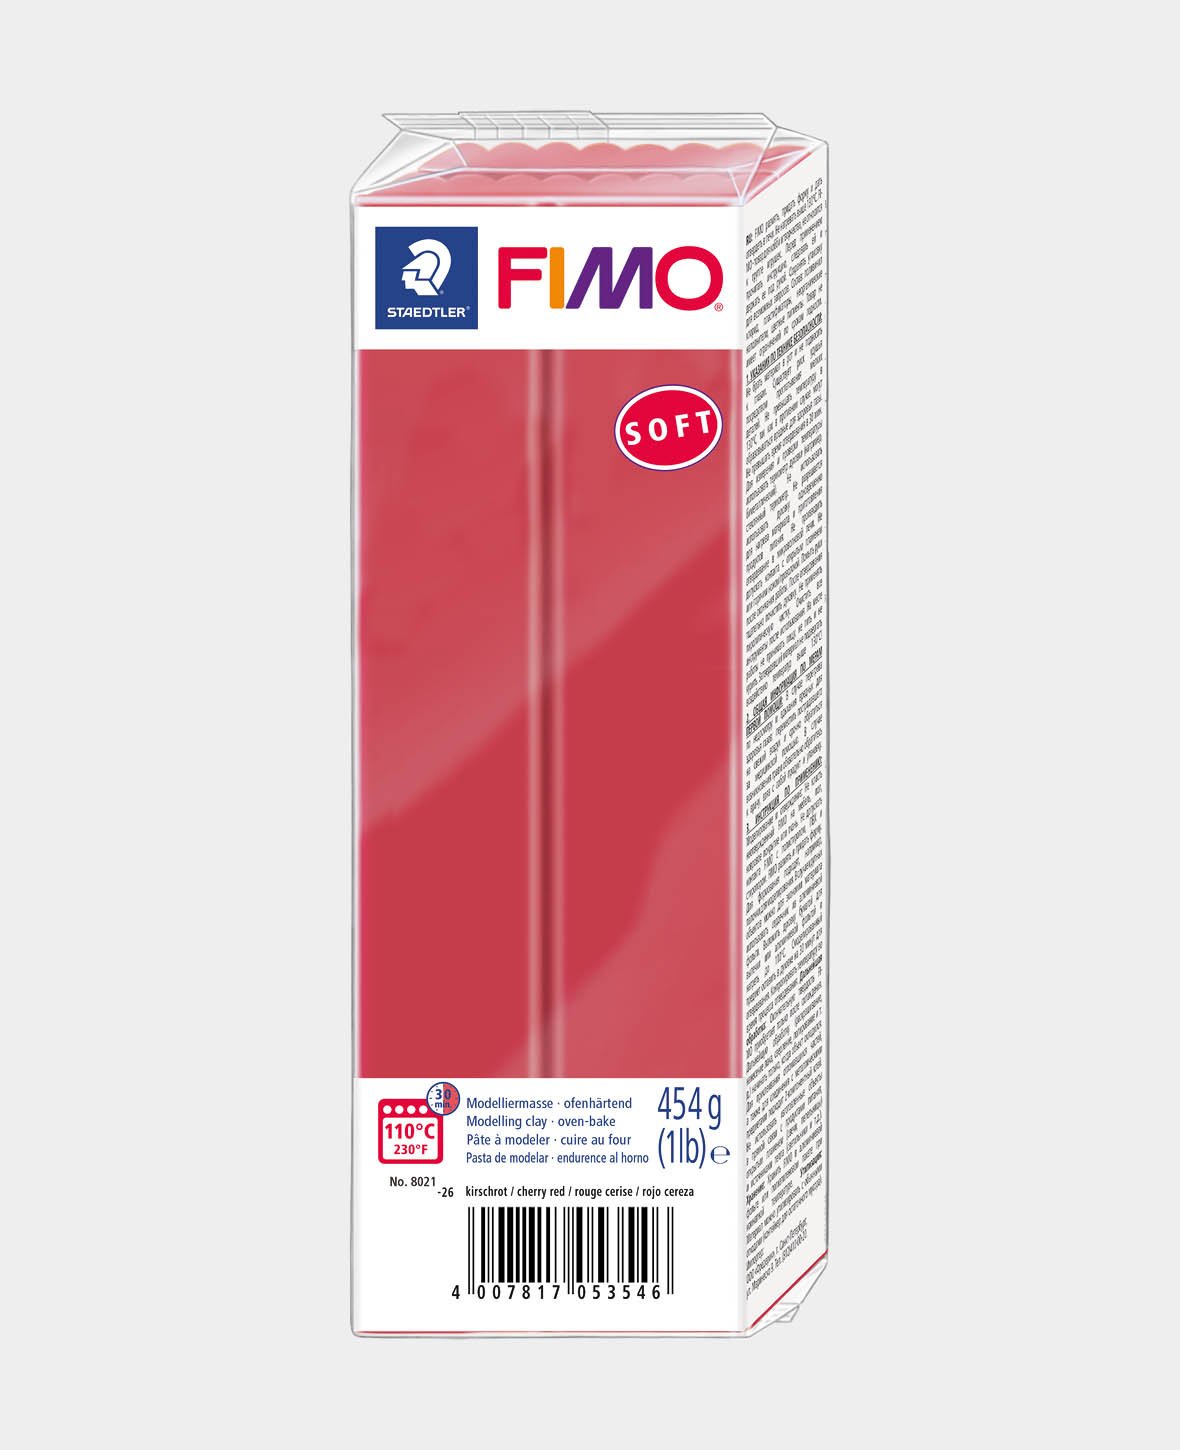 Großblock 350g Fimo Soft Basisfarben Kirschrot 